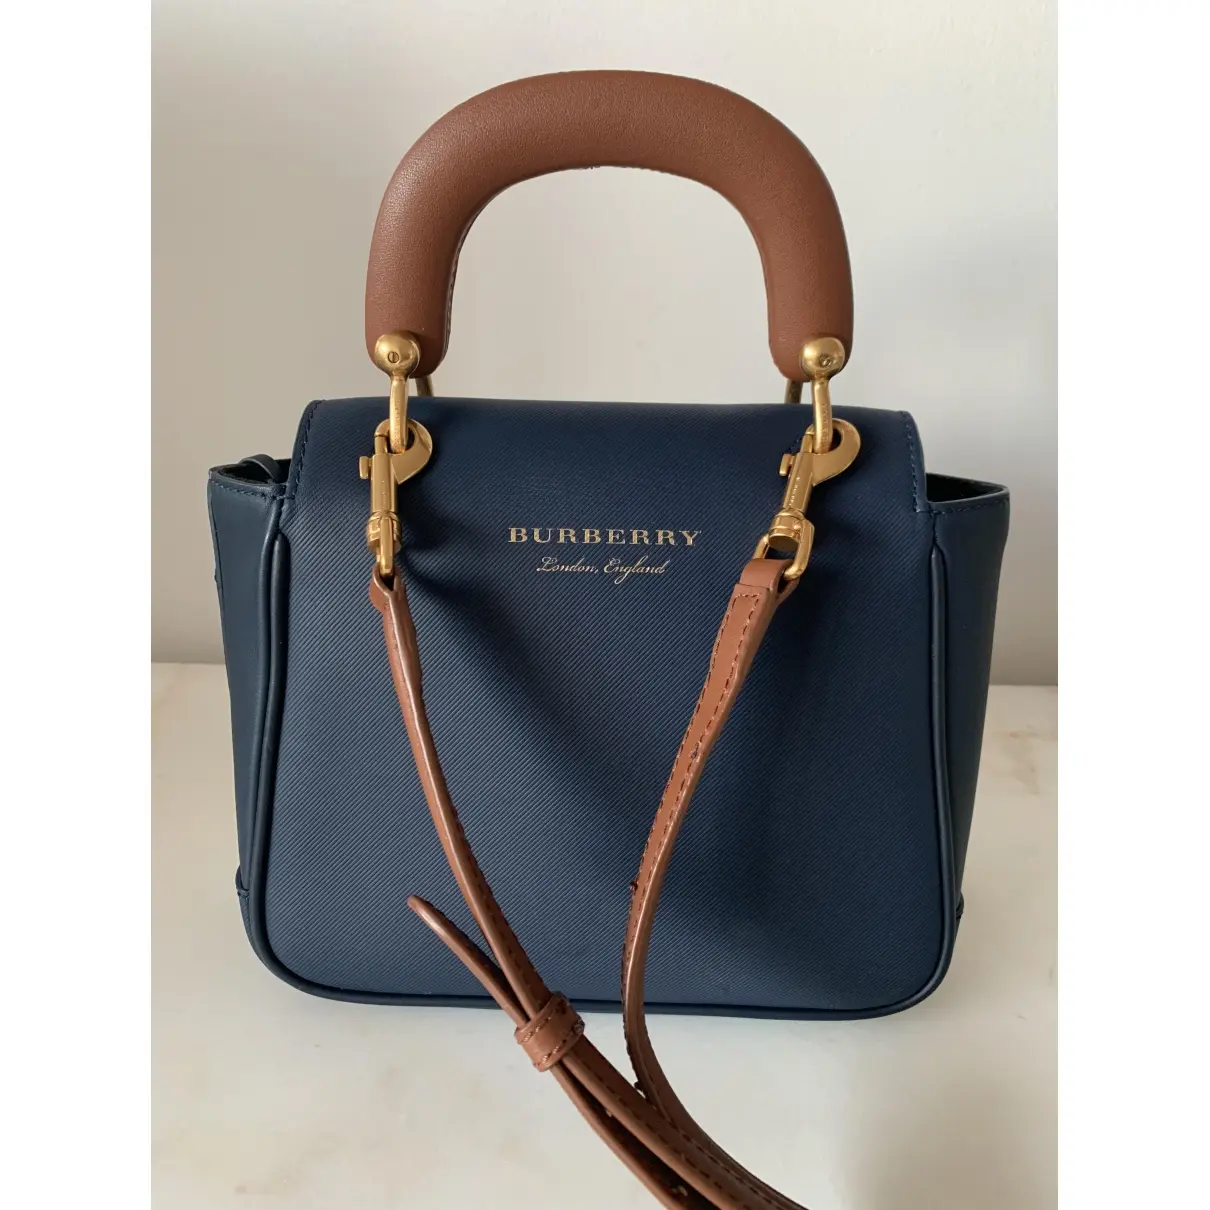 Burberry DK 88 leather handbag for sale